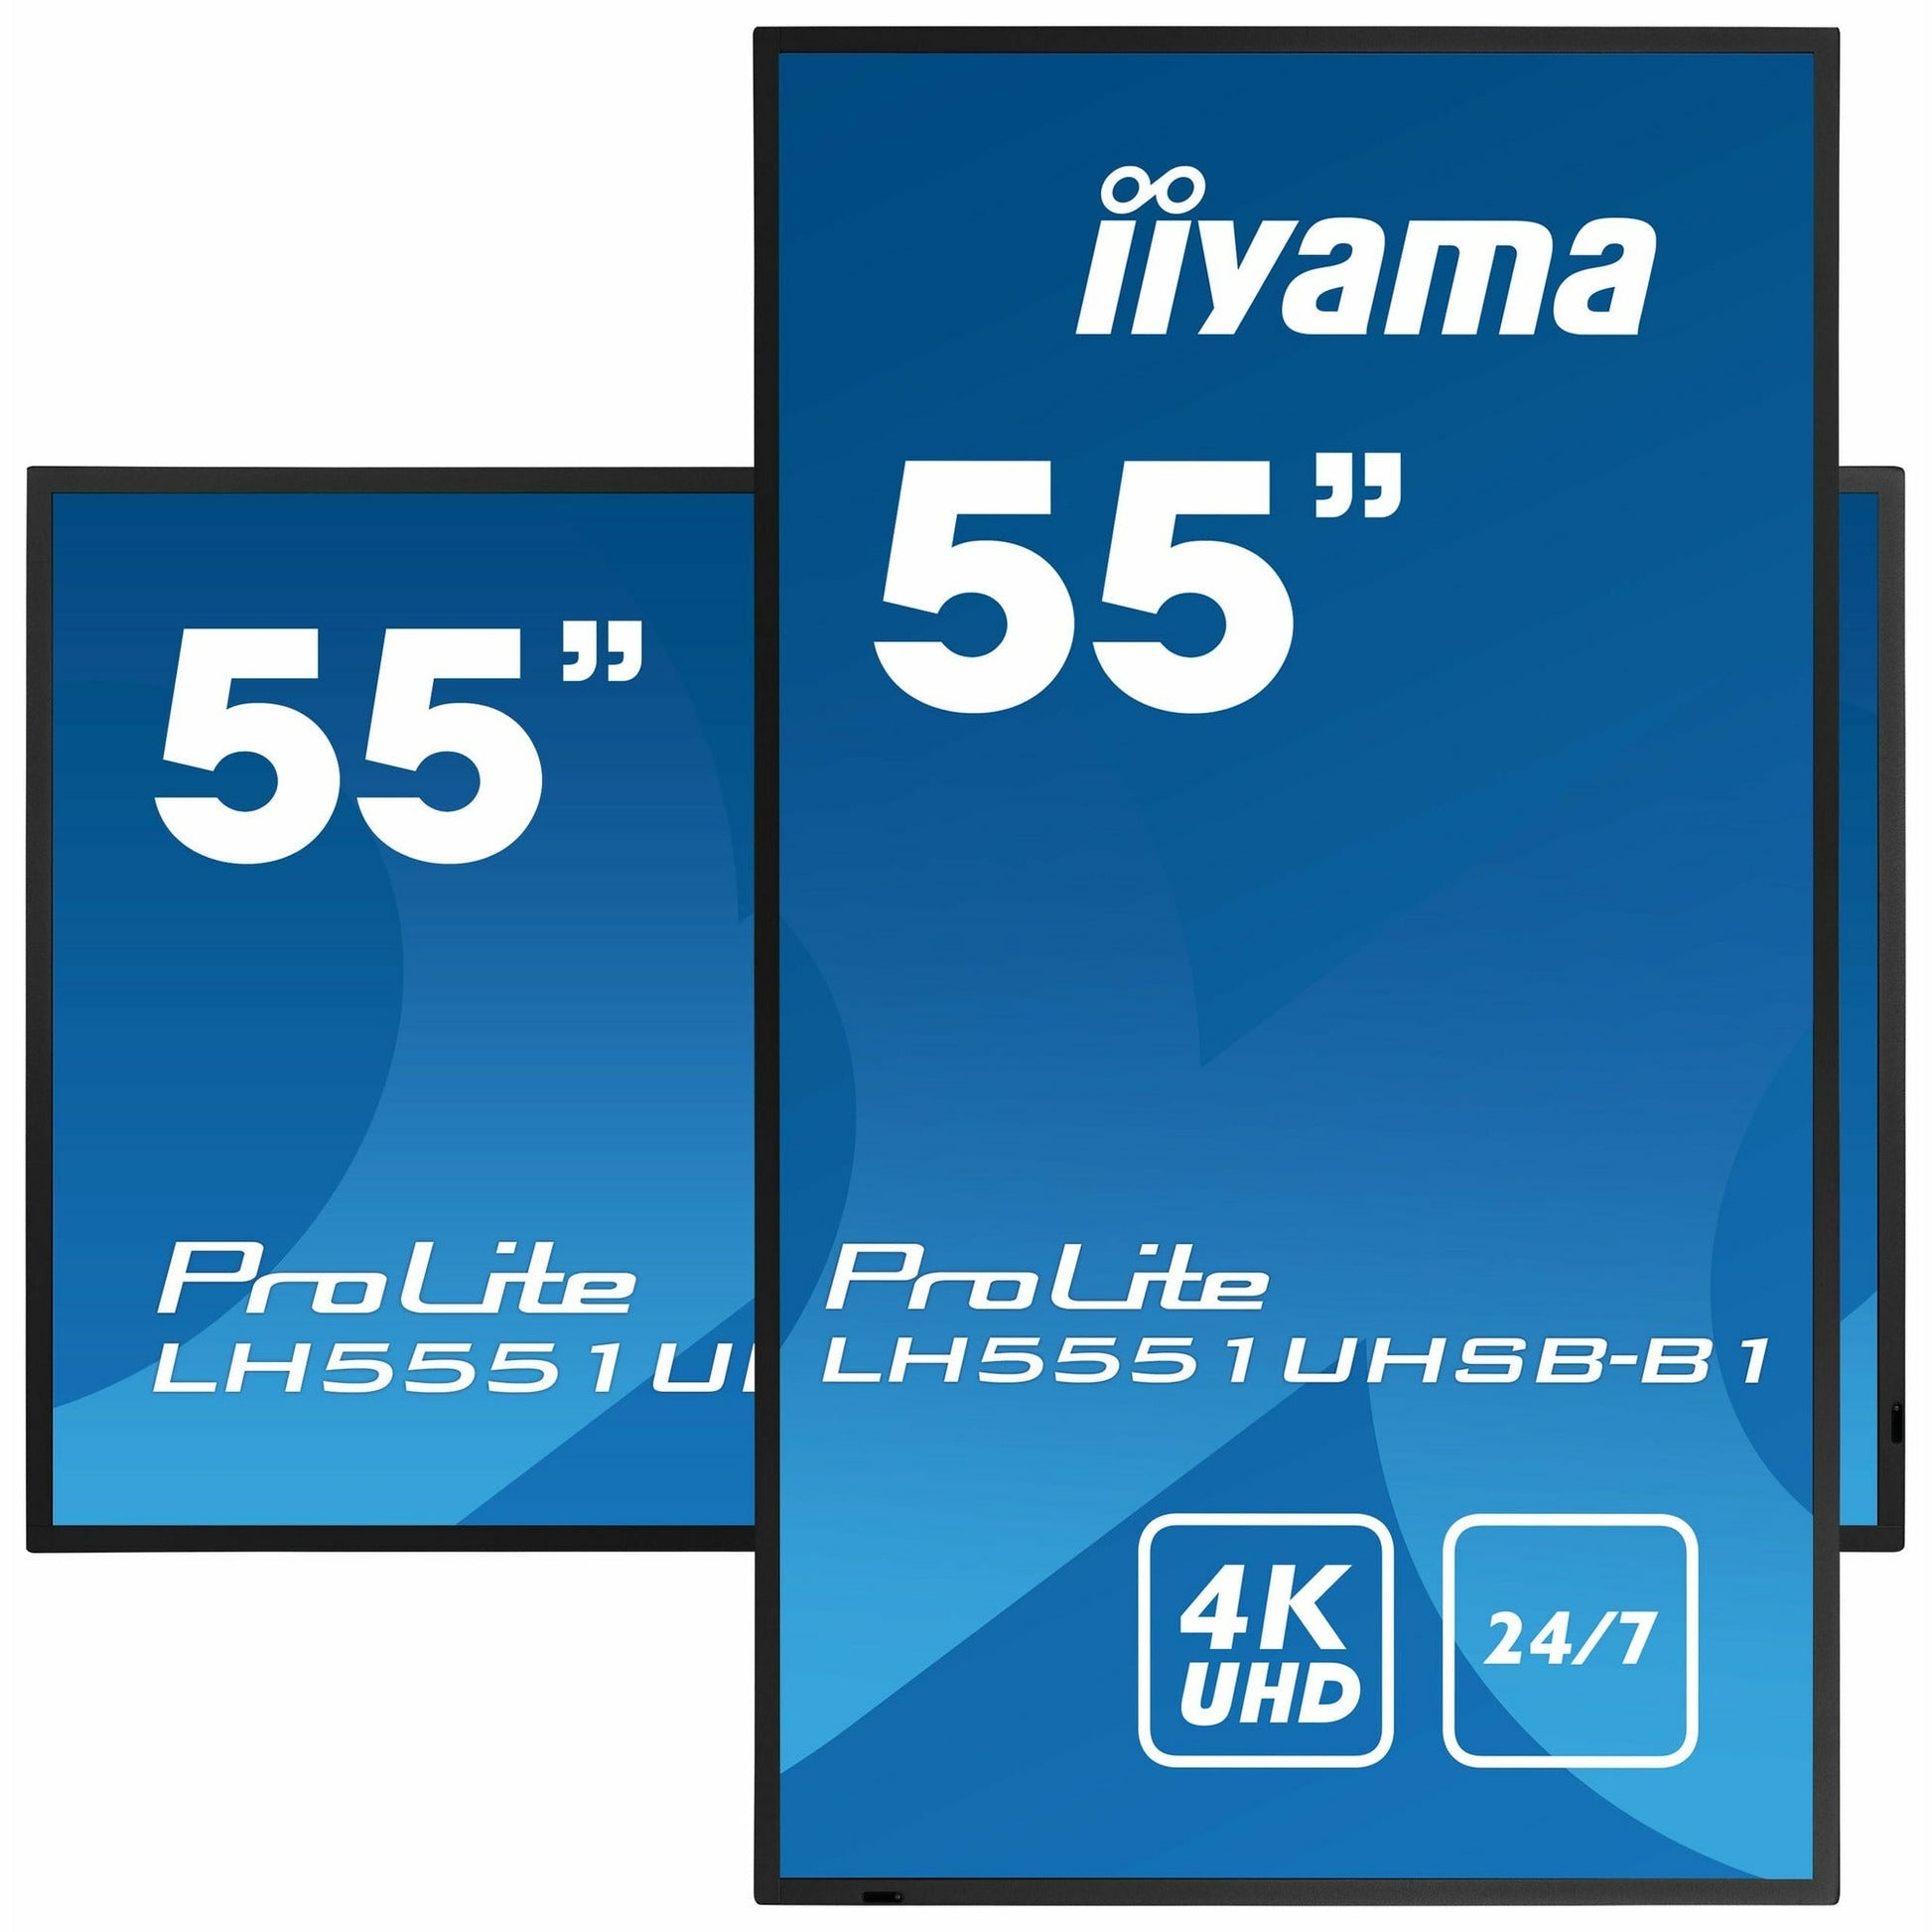 Dark Cyan Iiyama ProLite LH5551UHSB-B1 55" IPS 4K UHD Professional 24/7 Digital Signage Display with Intel SDM Slot